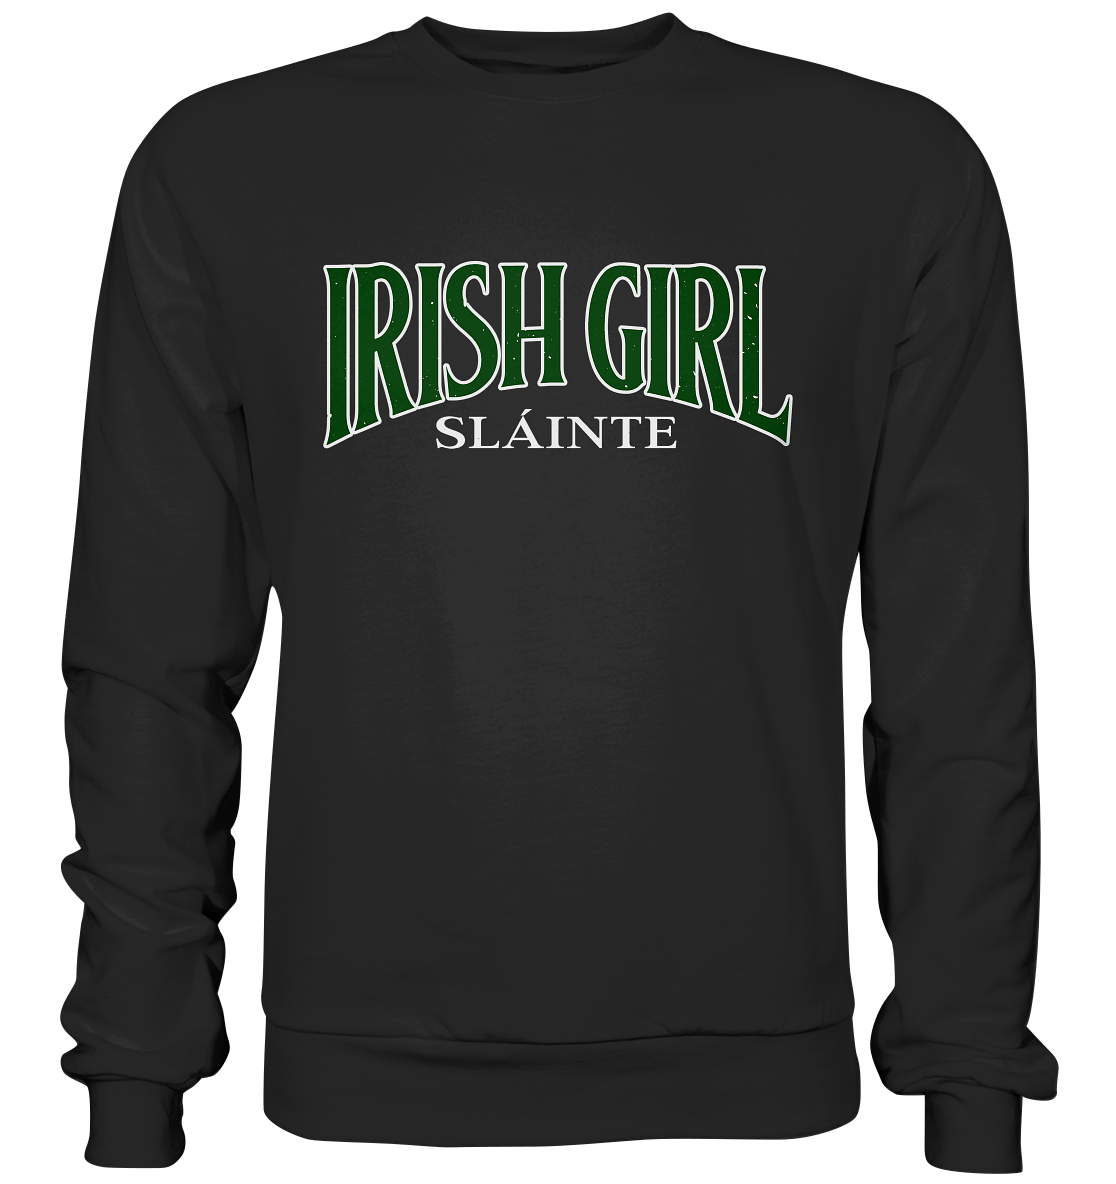 Irish Girl "Sláinte" - Premium Sweatshirt